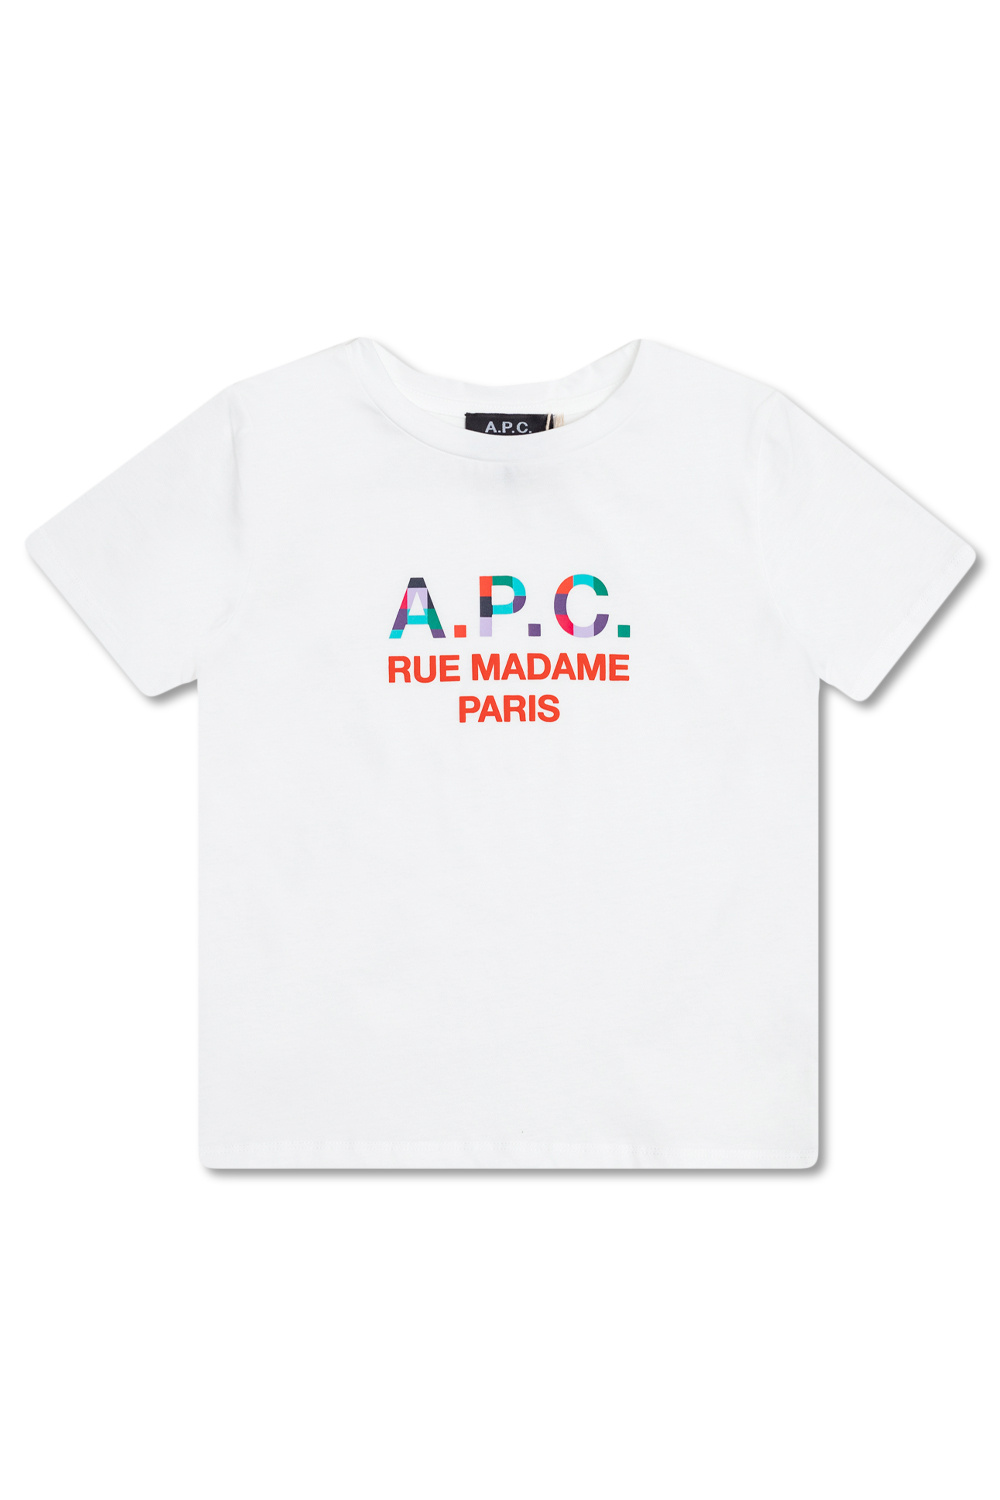 A.P.C. Kids Eterna langarm hemd slim fit performance shirt stretch korallrot unifarben